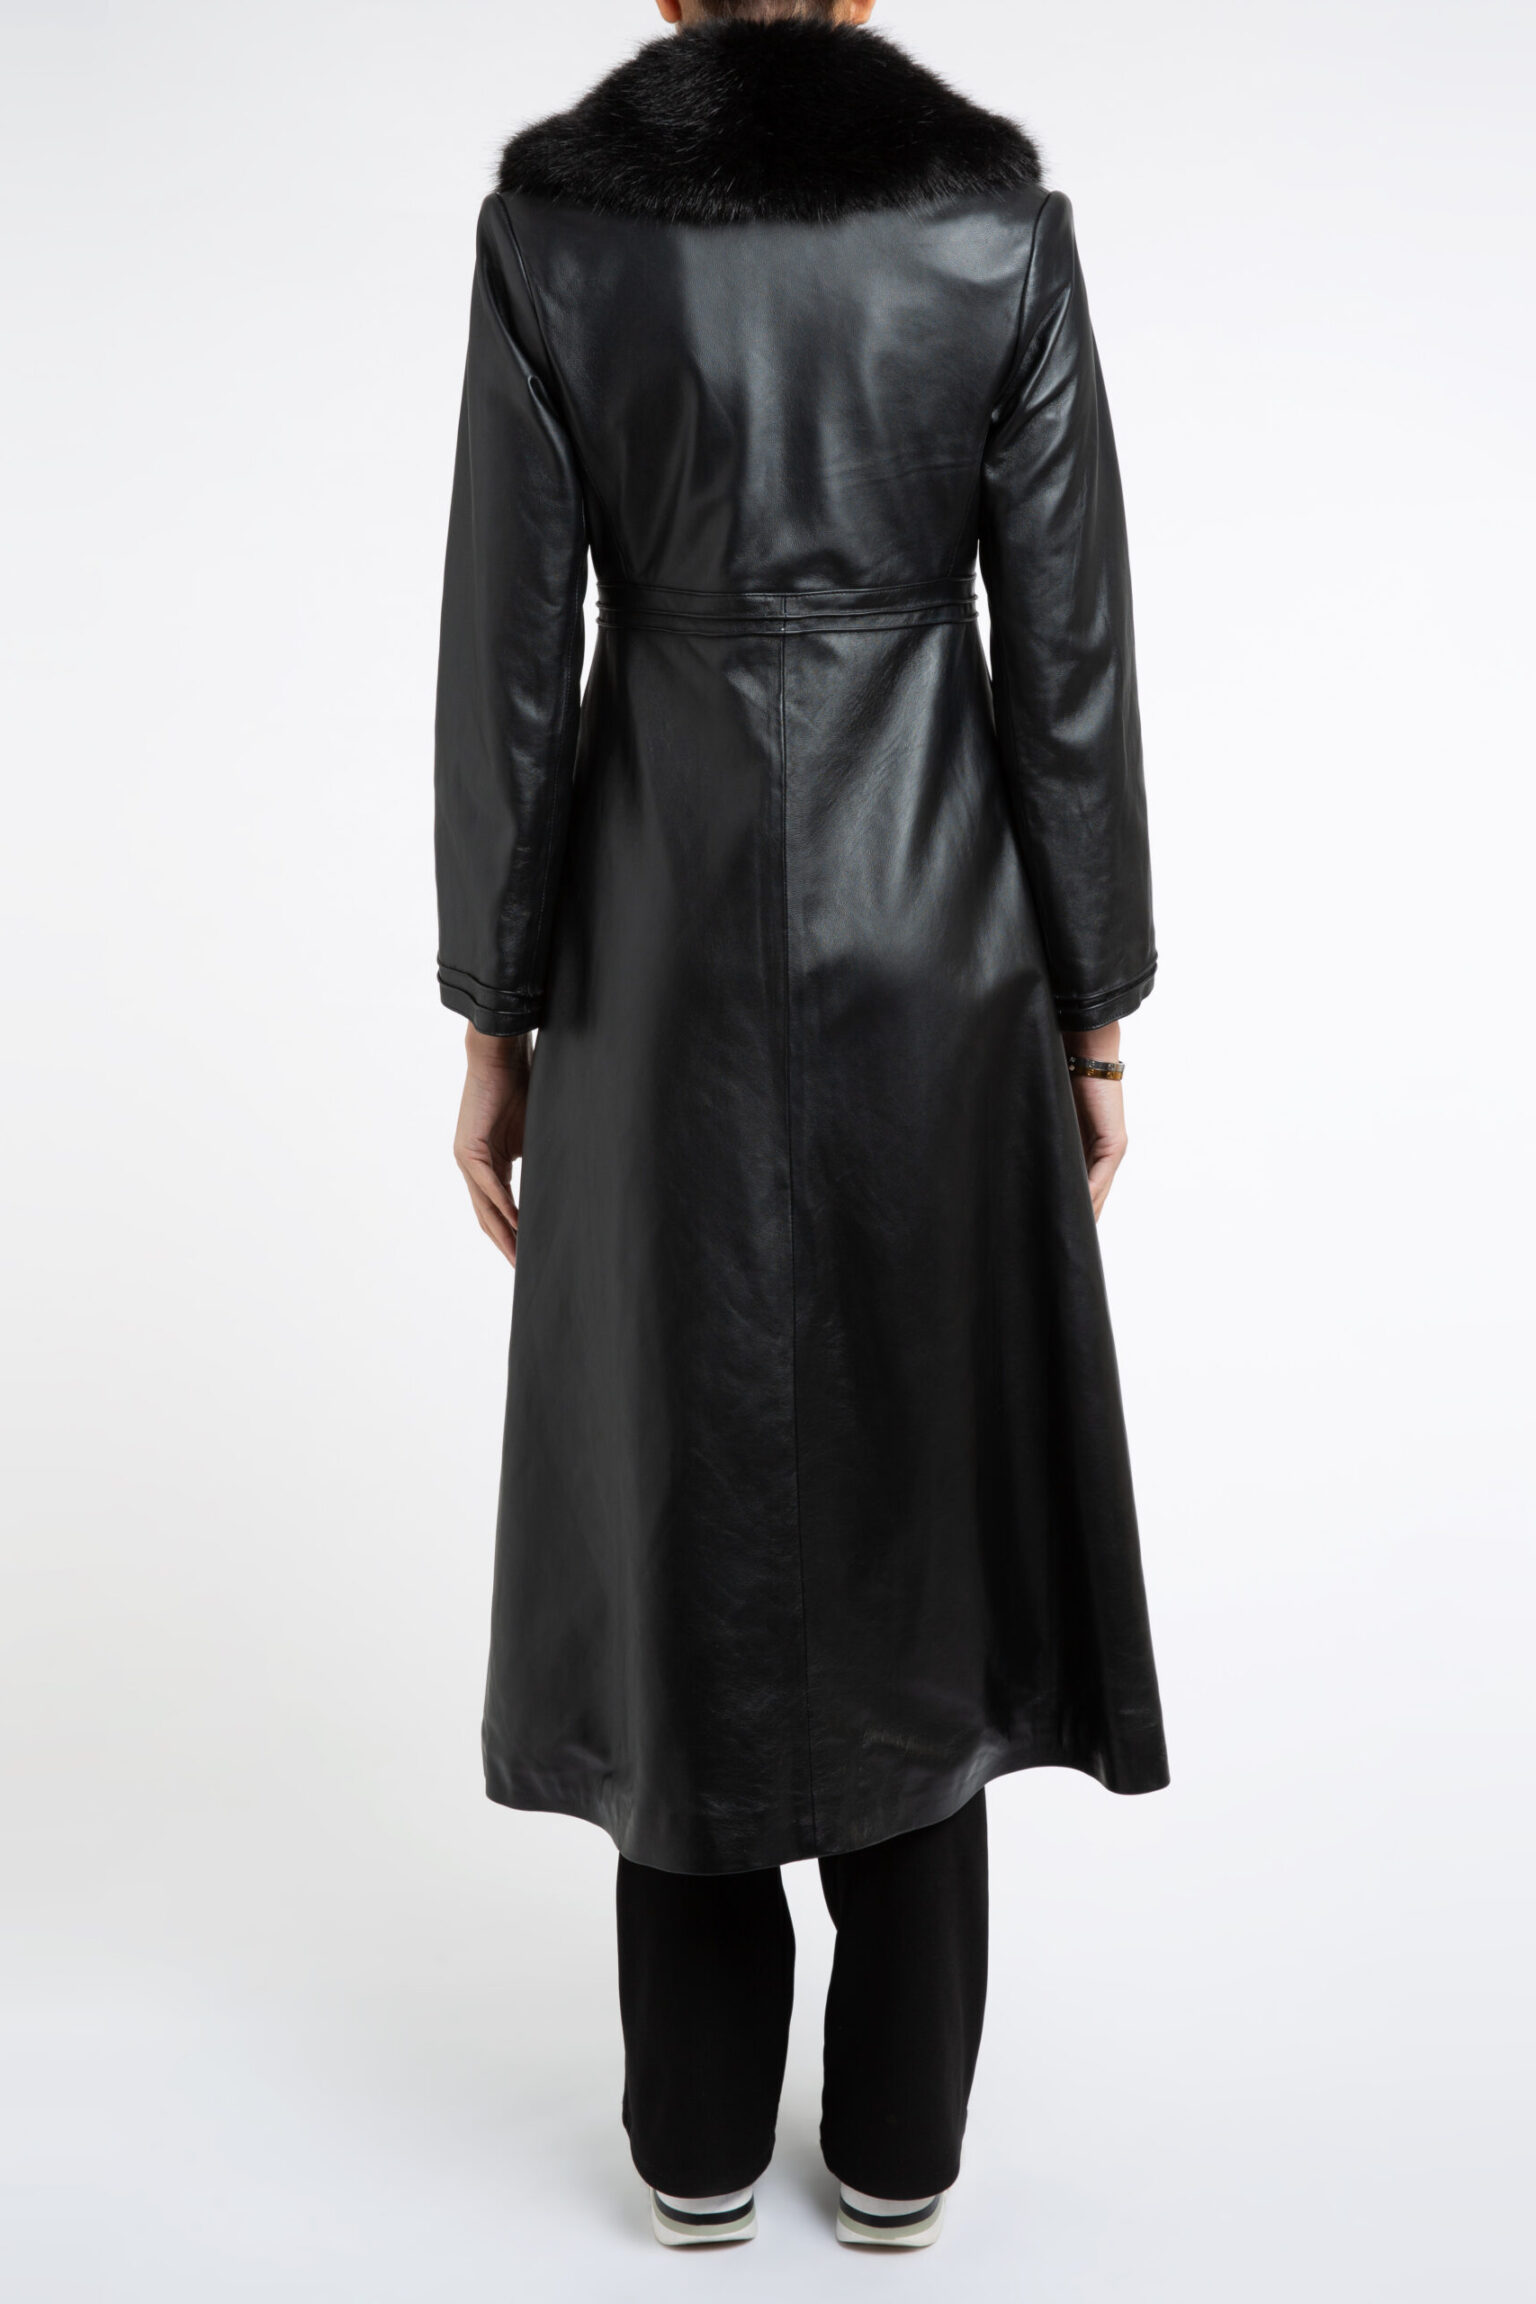 Bespoke Edward Leather Trench Coat in Black